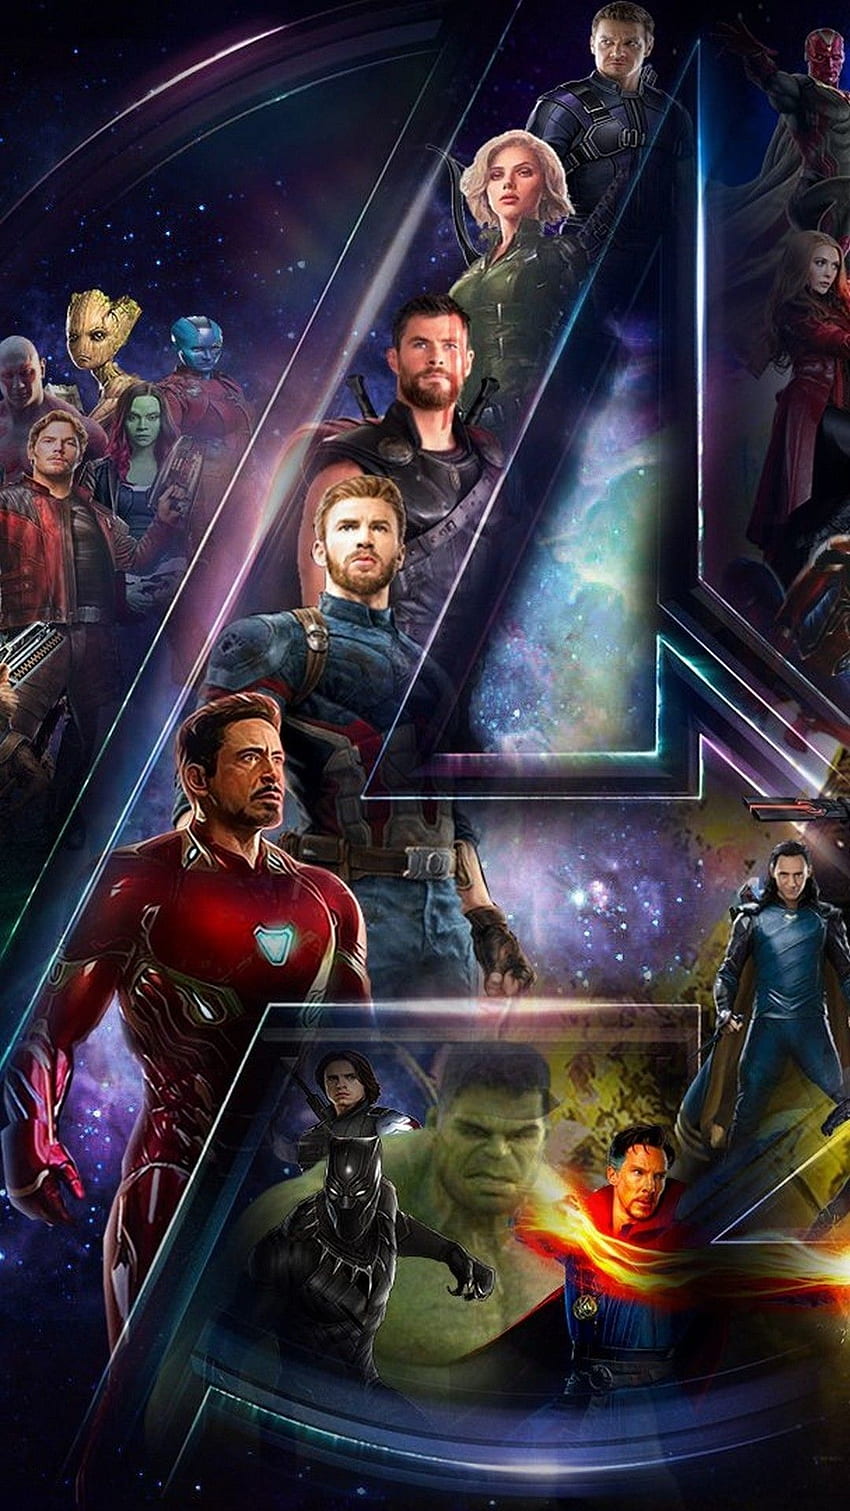 Wallpaper ID: 78655 / avengers endgame, thor, iron man, captain america, 4k,  2019 movies, movies, hd, 4k, poster, superheroes Wallpaper